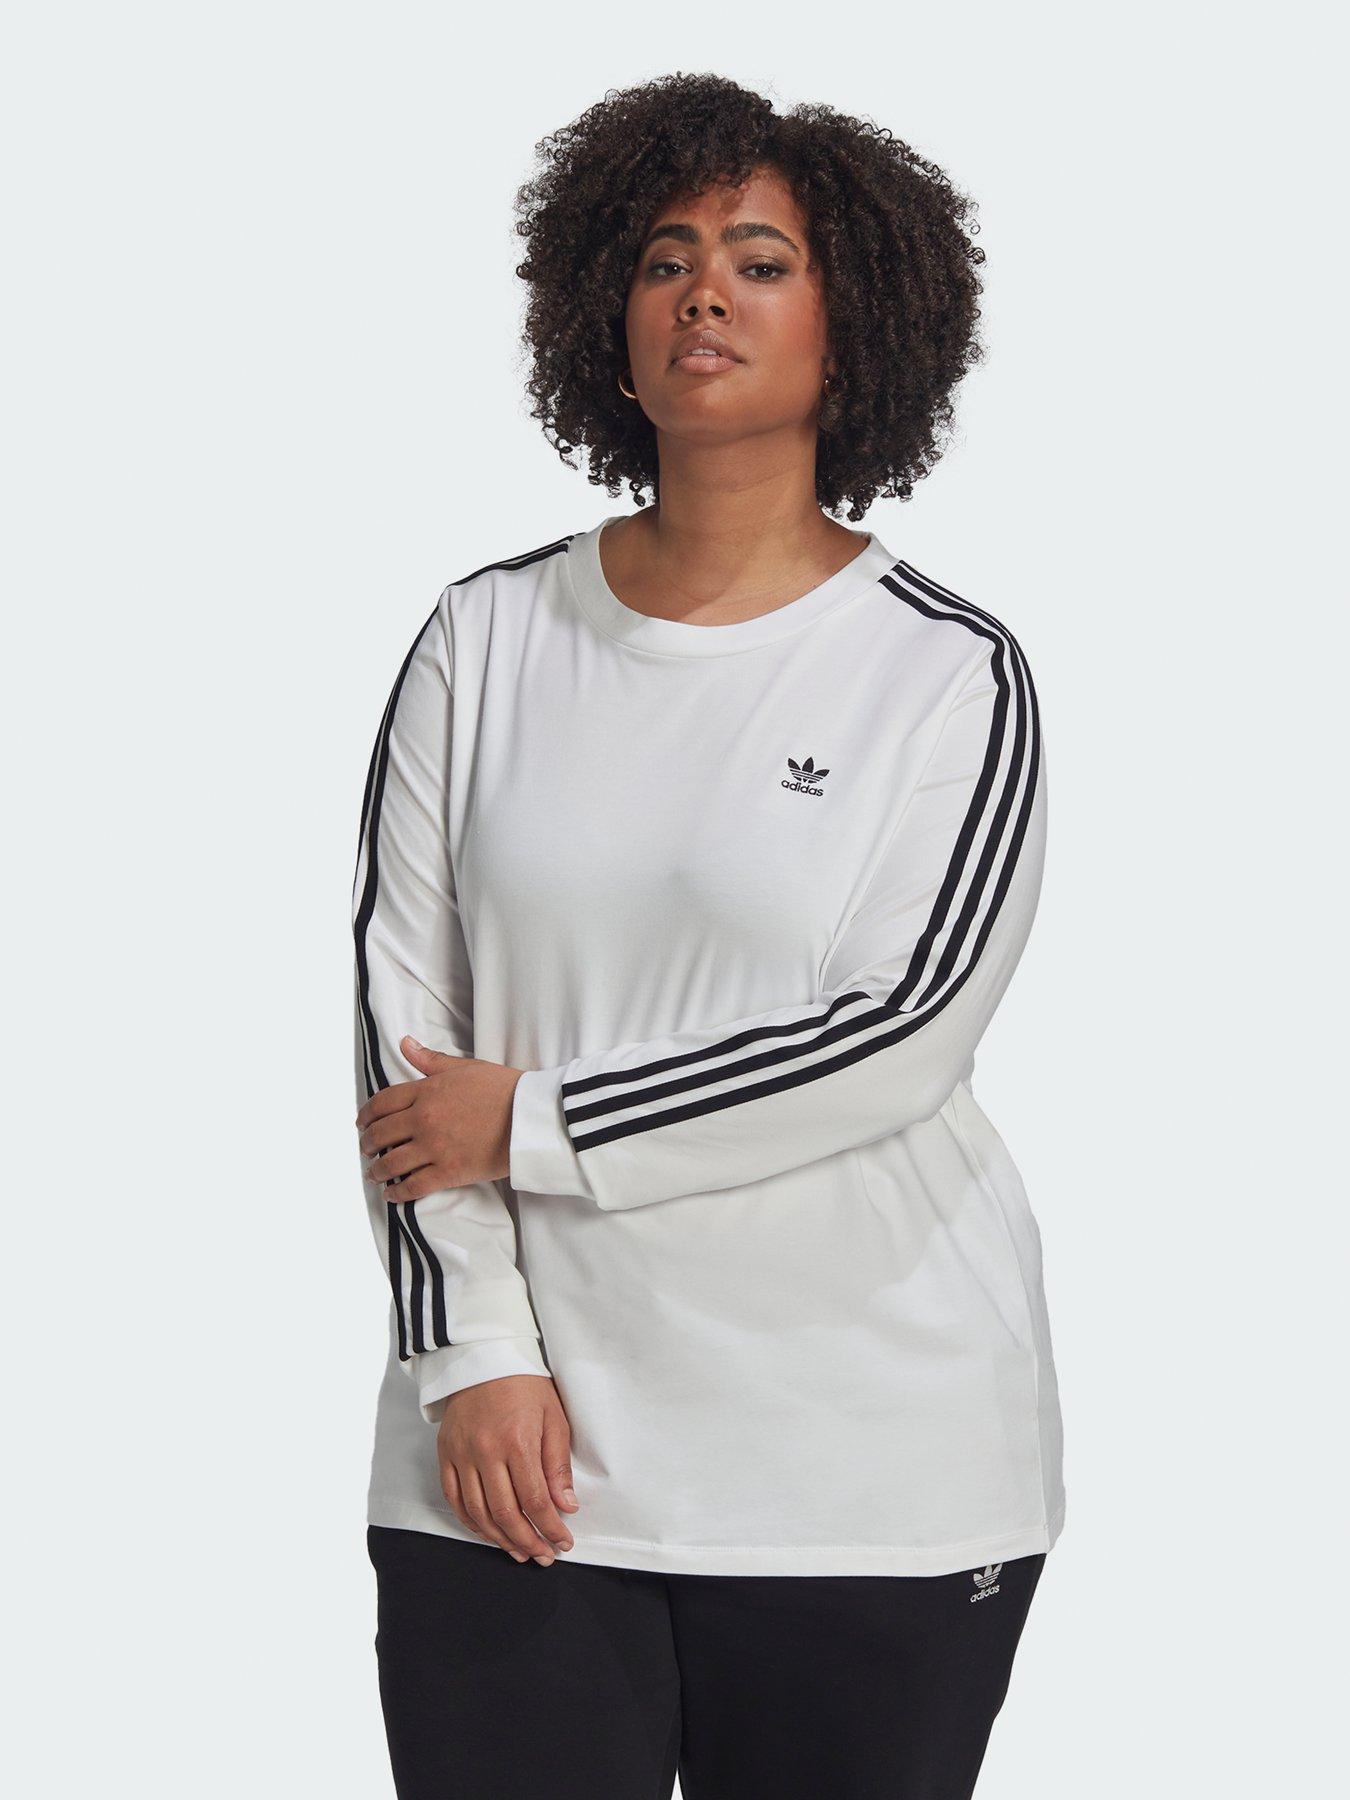 Adidas Originals 3 Stripe Longsleeve Tee - Plus Size - White/Black